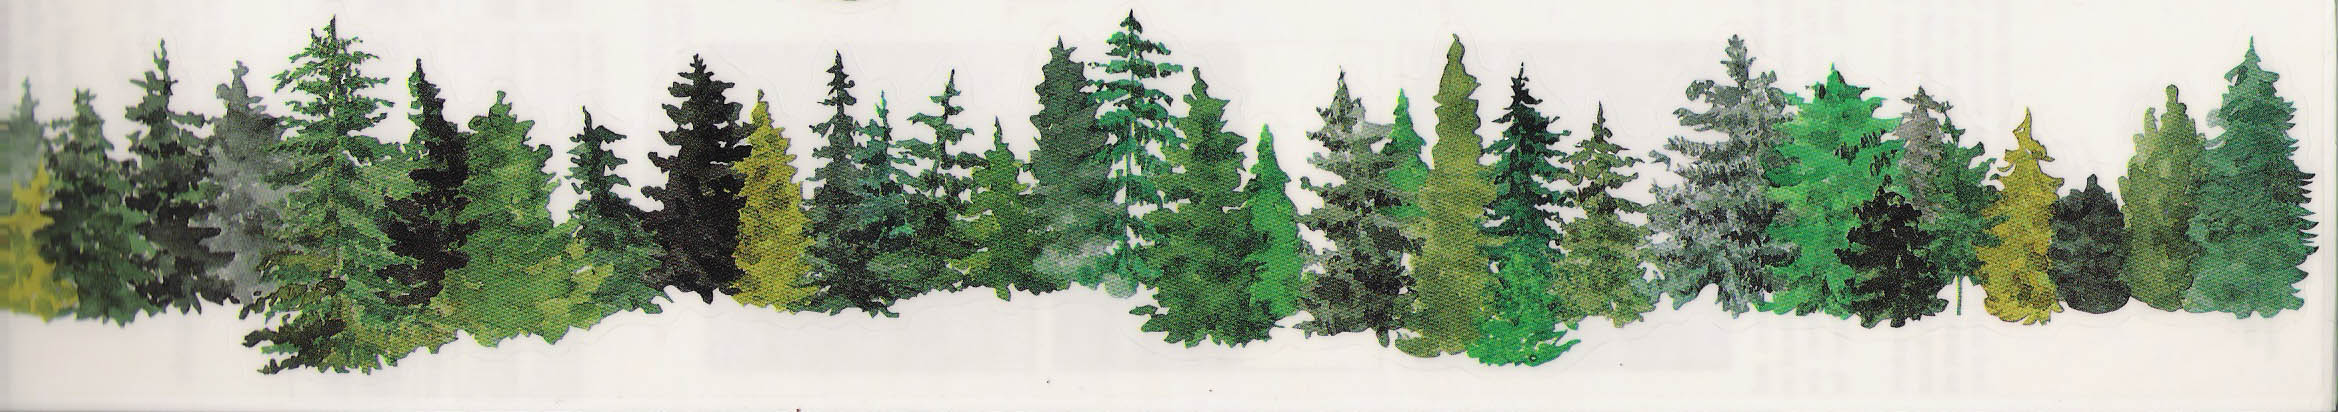 42+ Wallpaper Borders with Pine Trees on WallpaperSafari